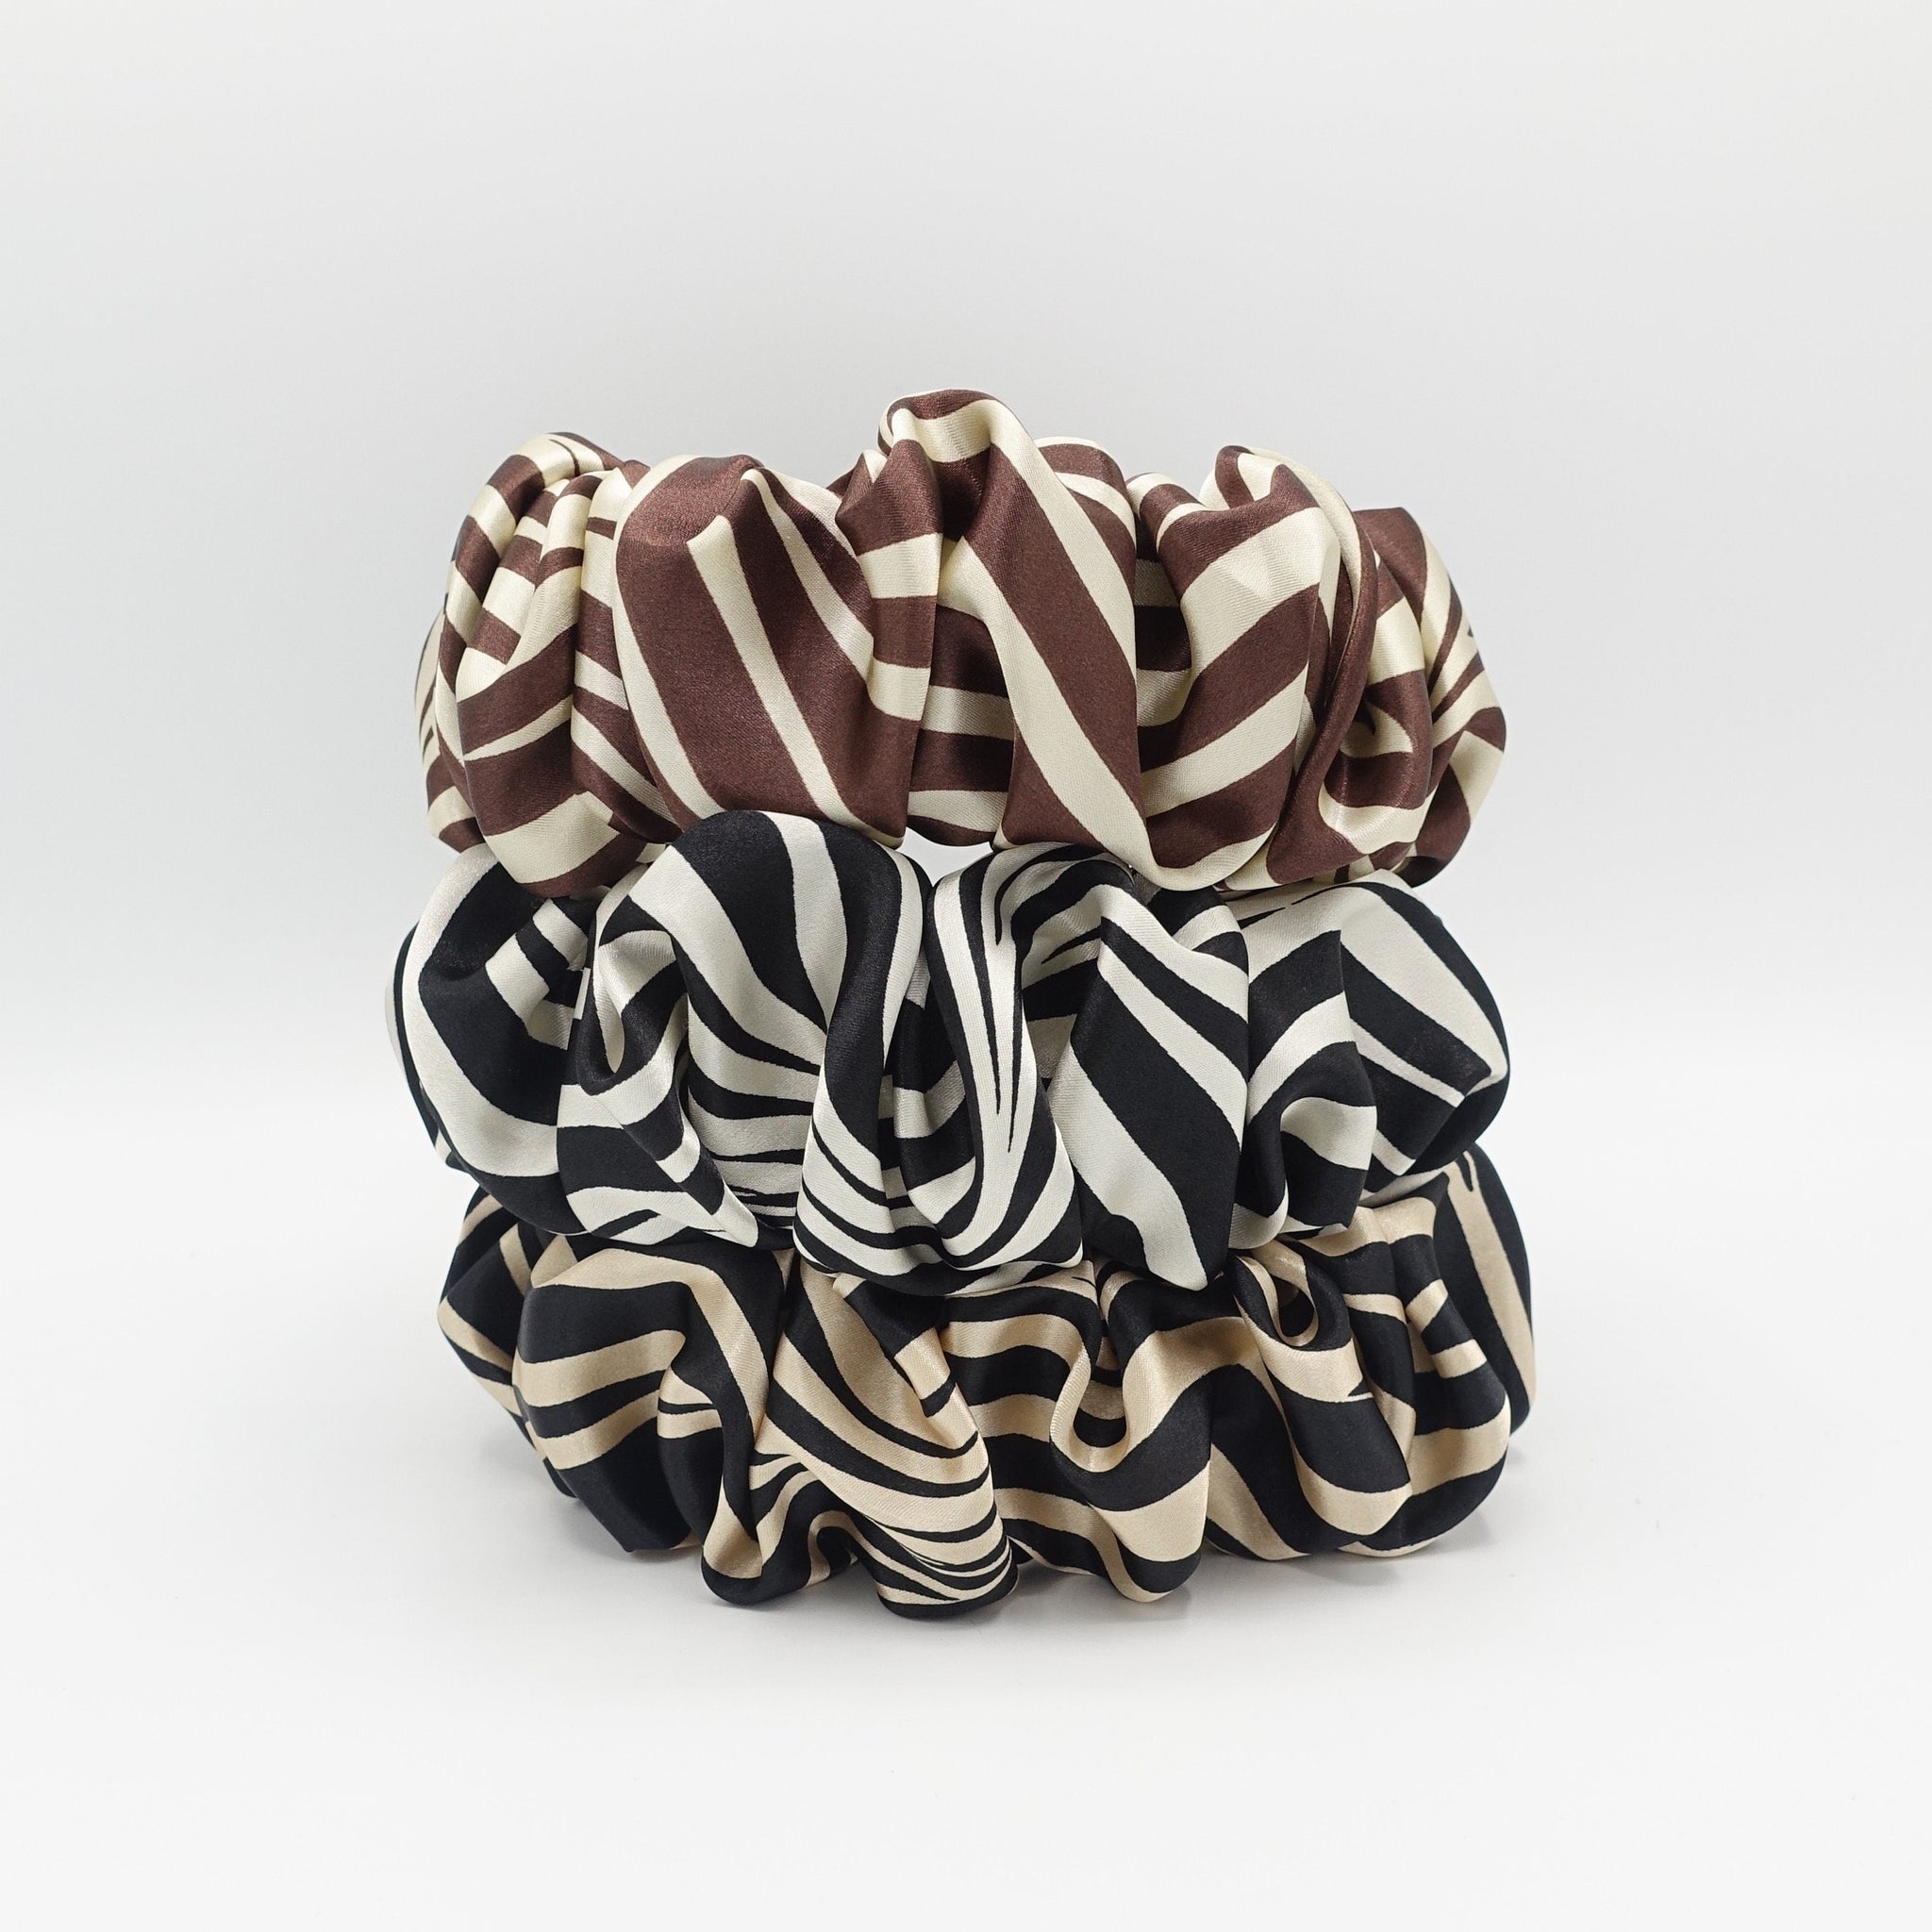 veryshine.com Headband zebra satin headband volume wave hairband stylish hair accessory